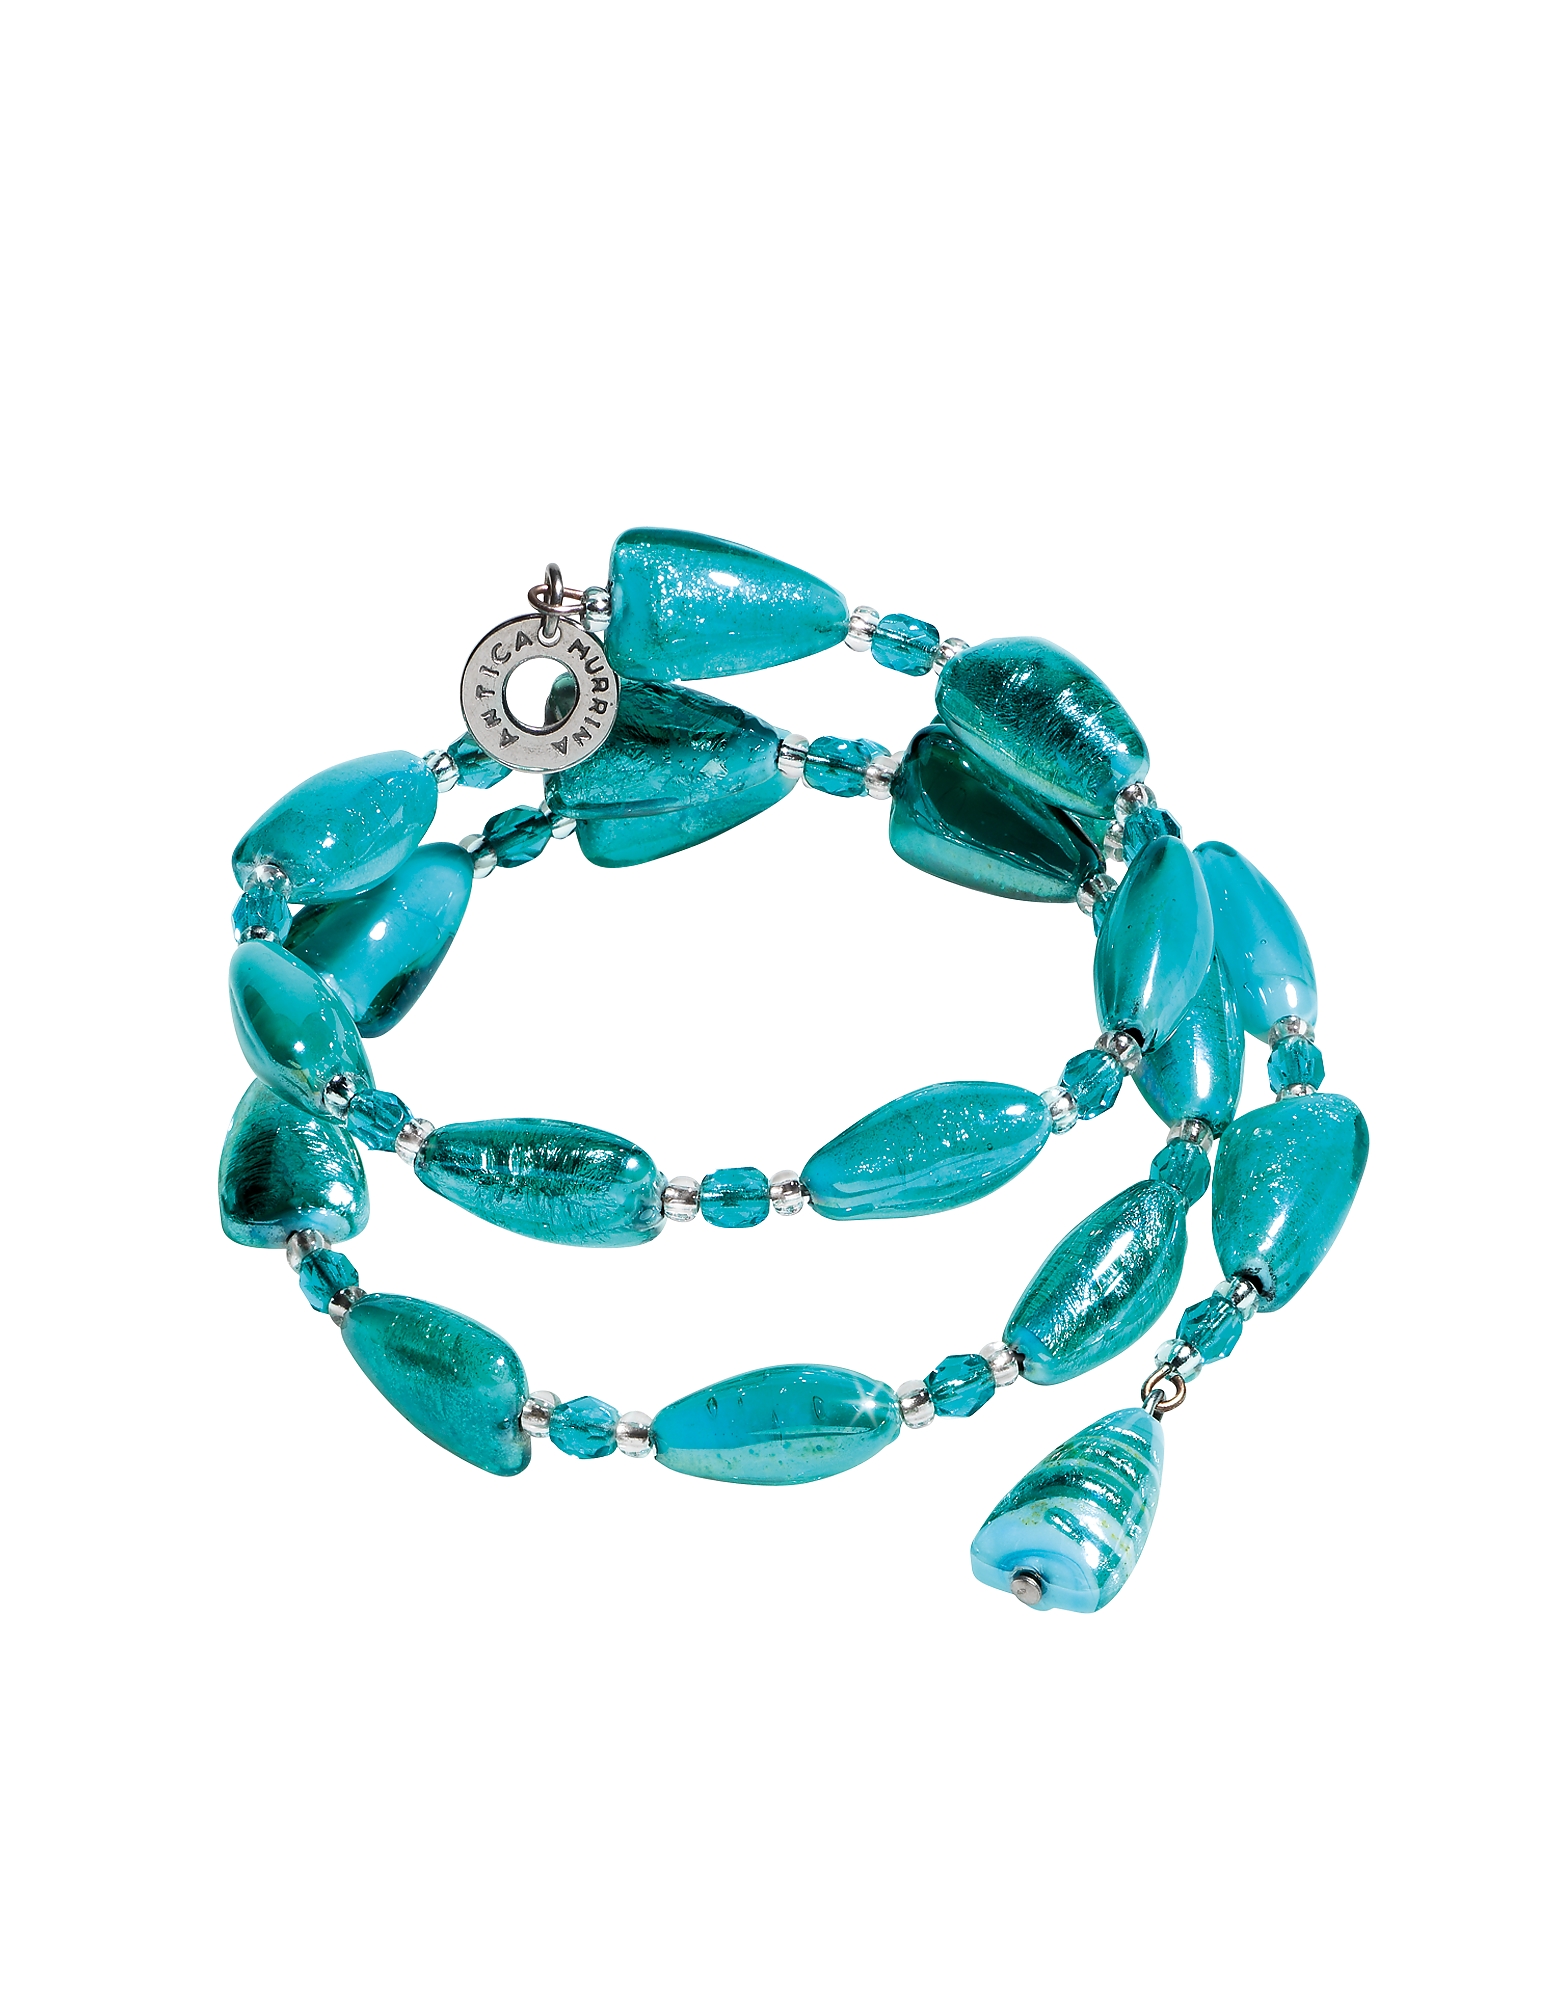 

Marina 1 Rigido - Turquoise Green Murano Glass and Silver Leaf Bracelet